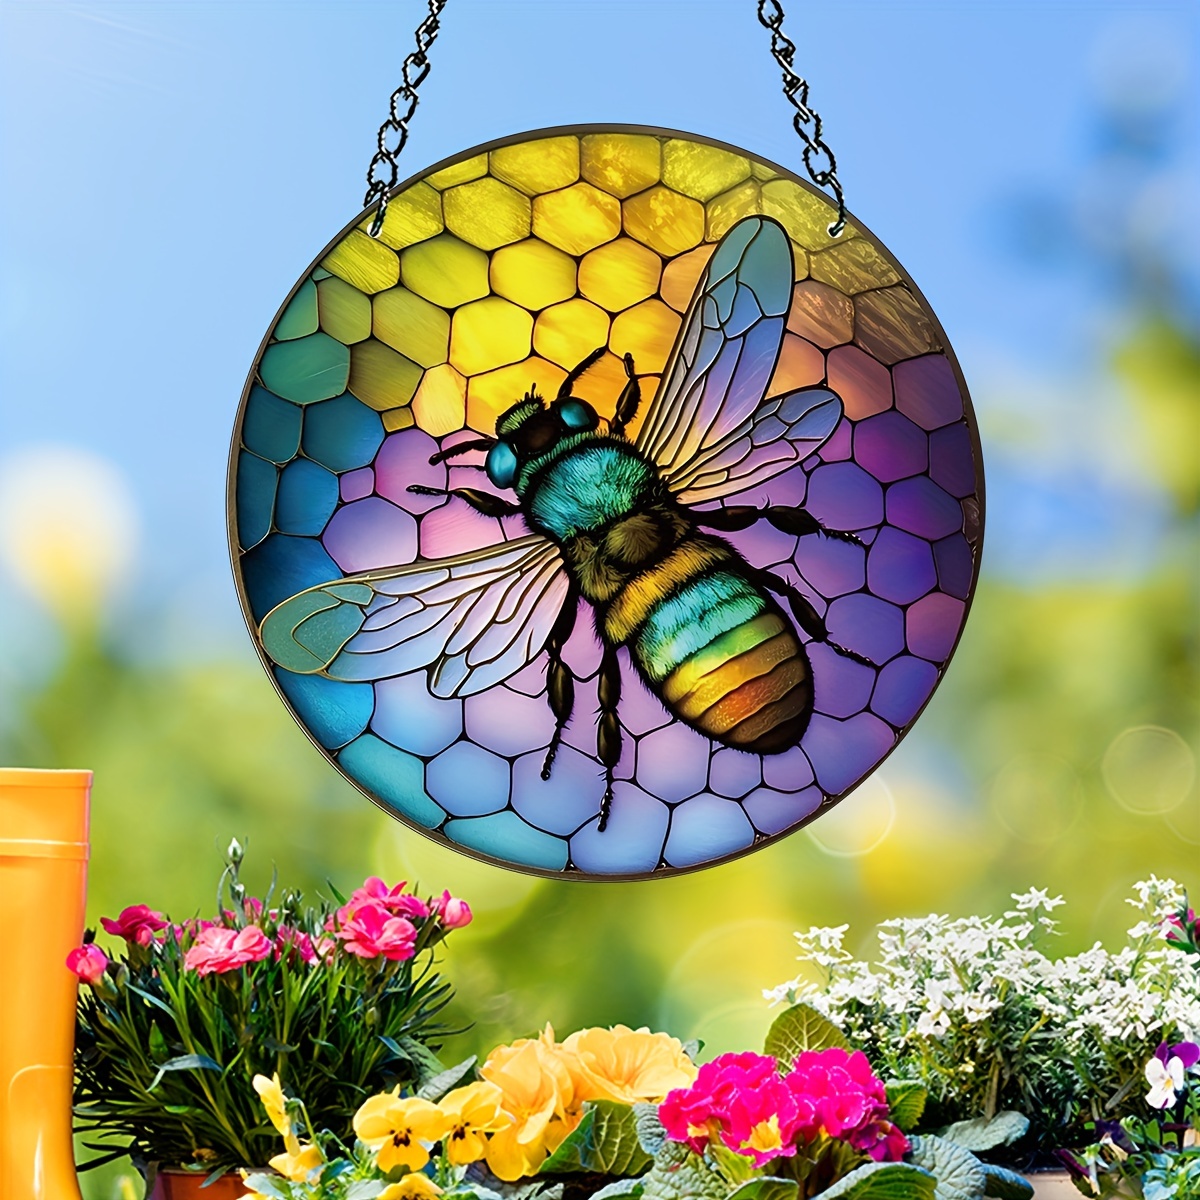 Stained Bee Honeycomb Hanging Suncatcher Ornaments Window Garden Decor